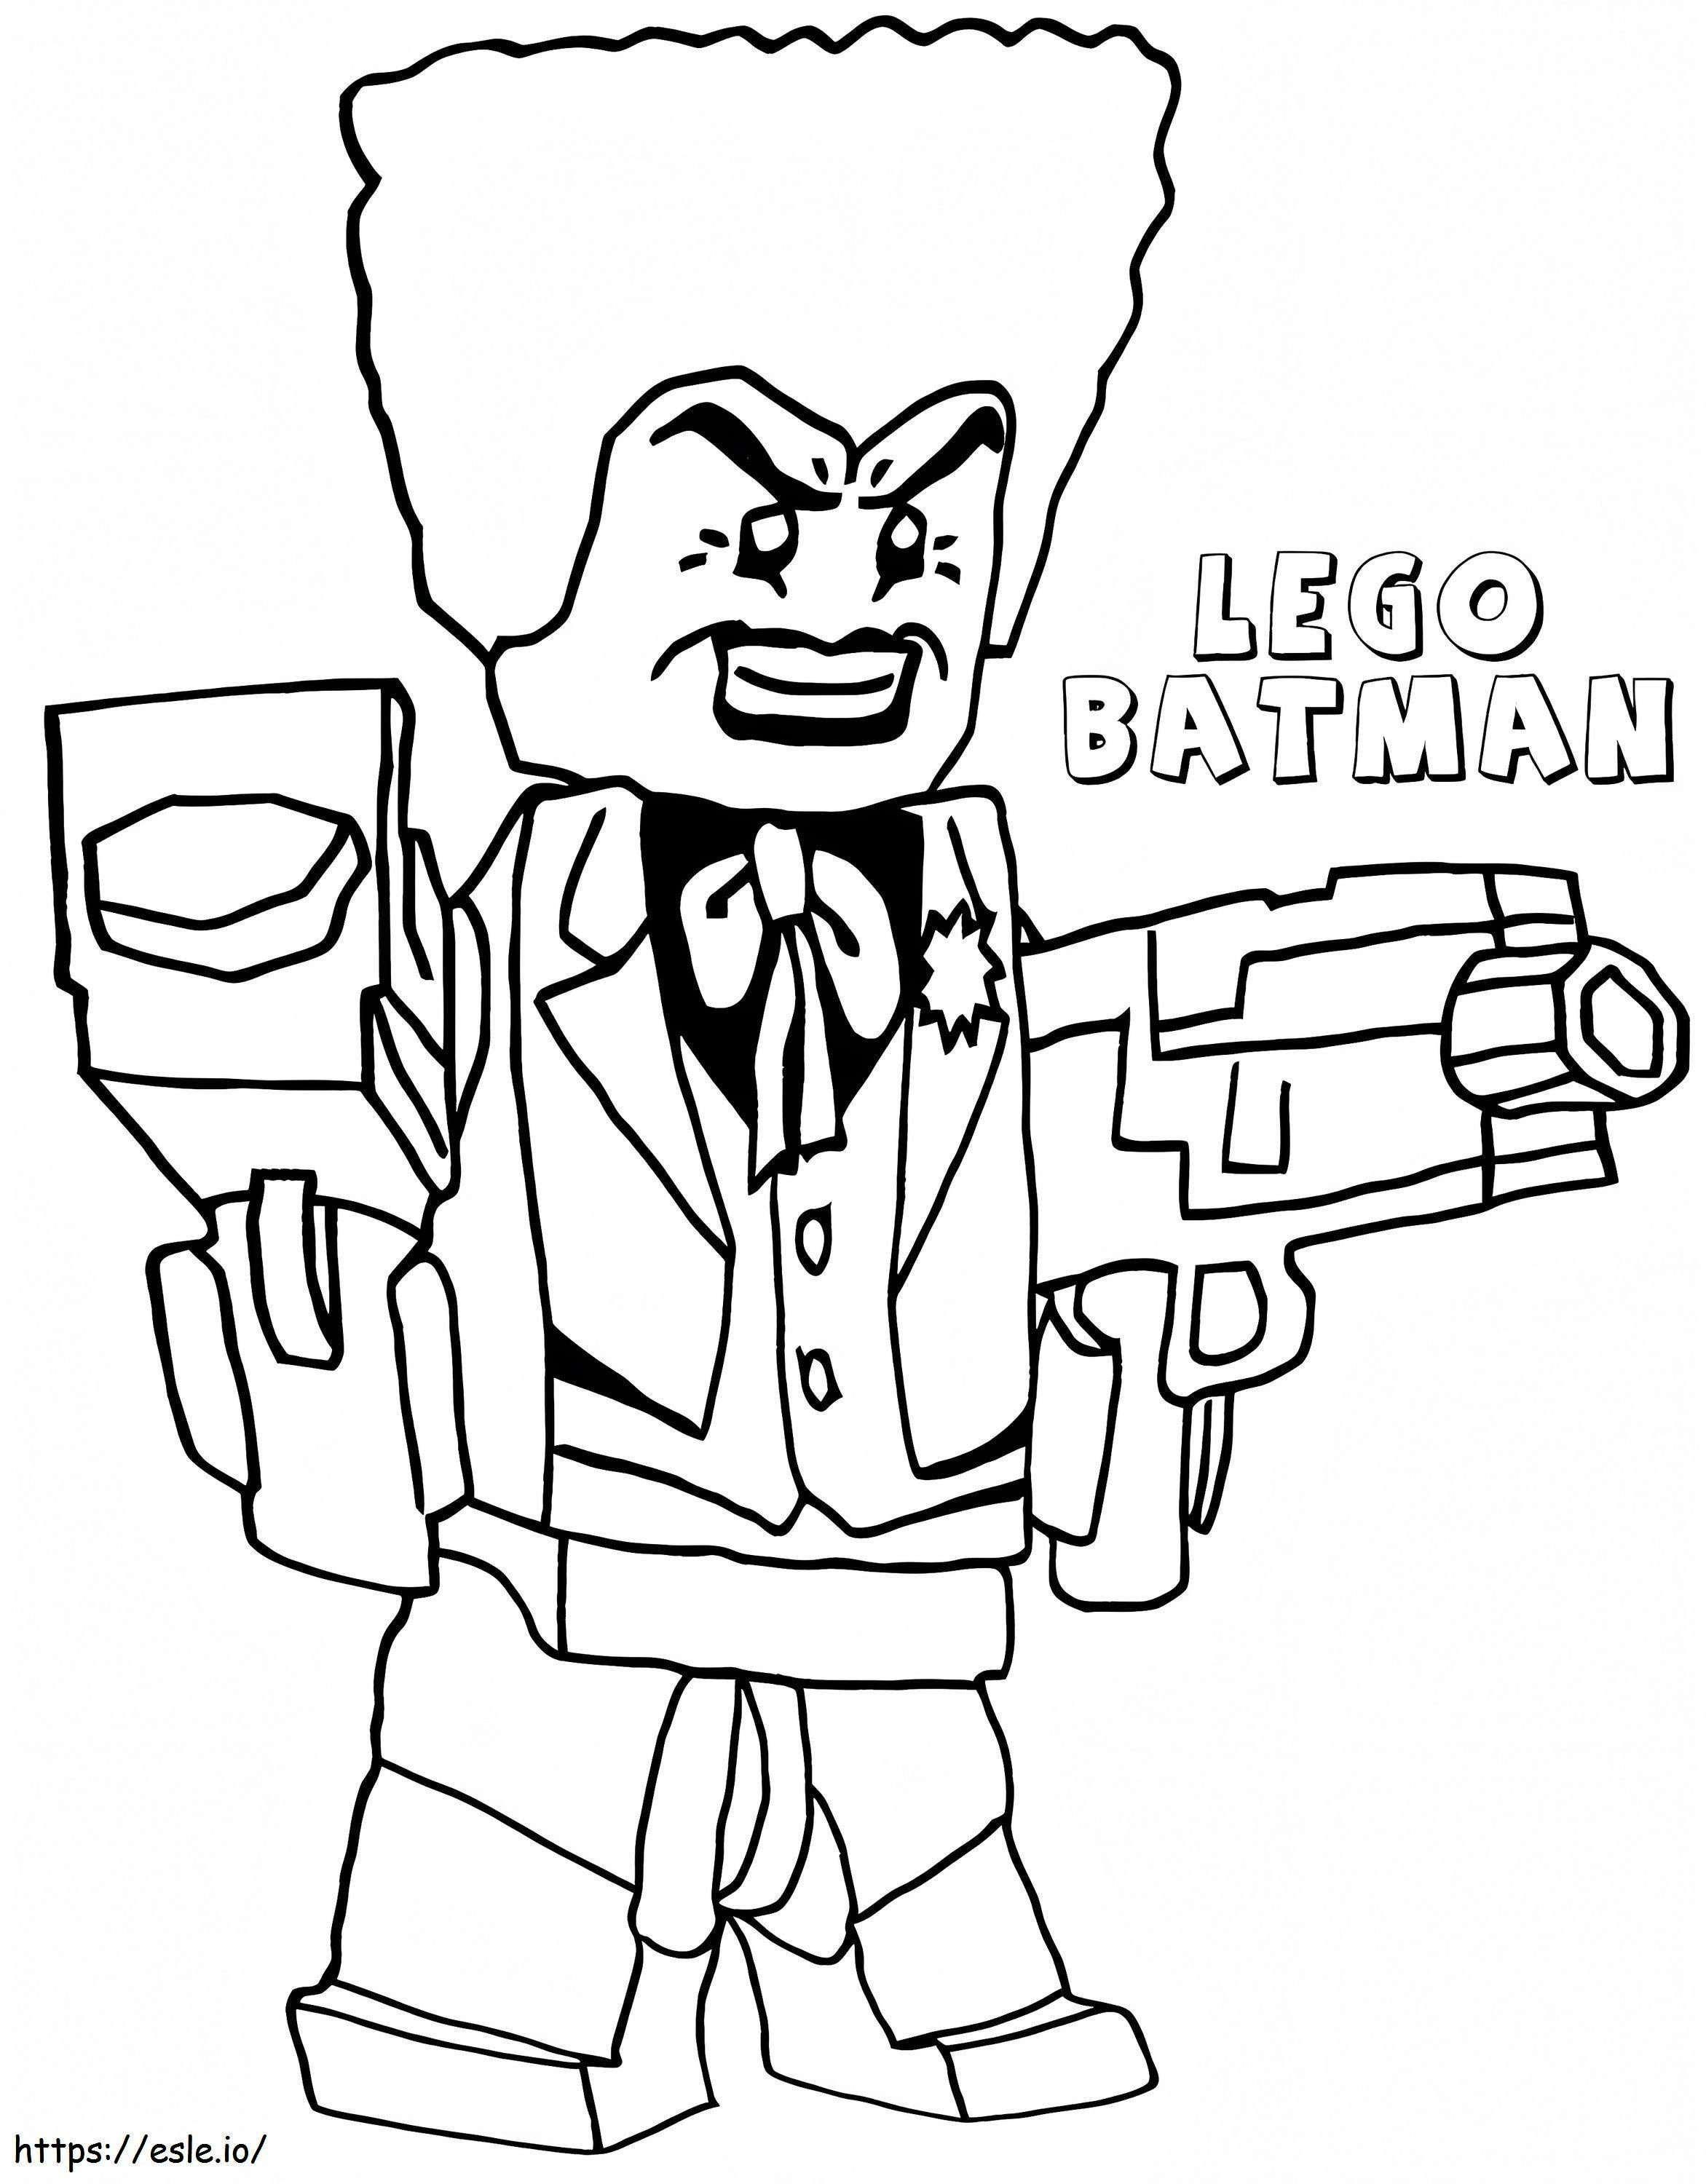 1547514416 Kissclipart Joker Lego Batman Clipart Batman Jo 09C4555Cfc03B758 coloring page